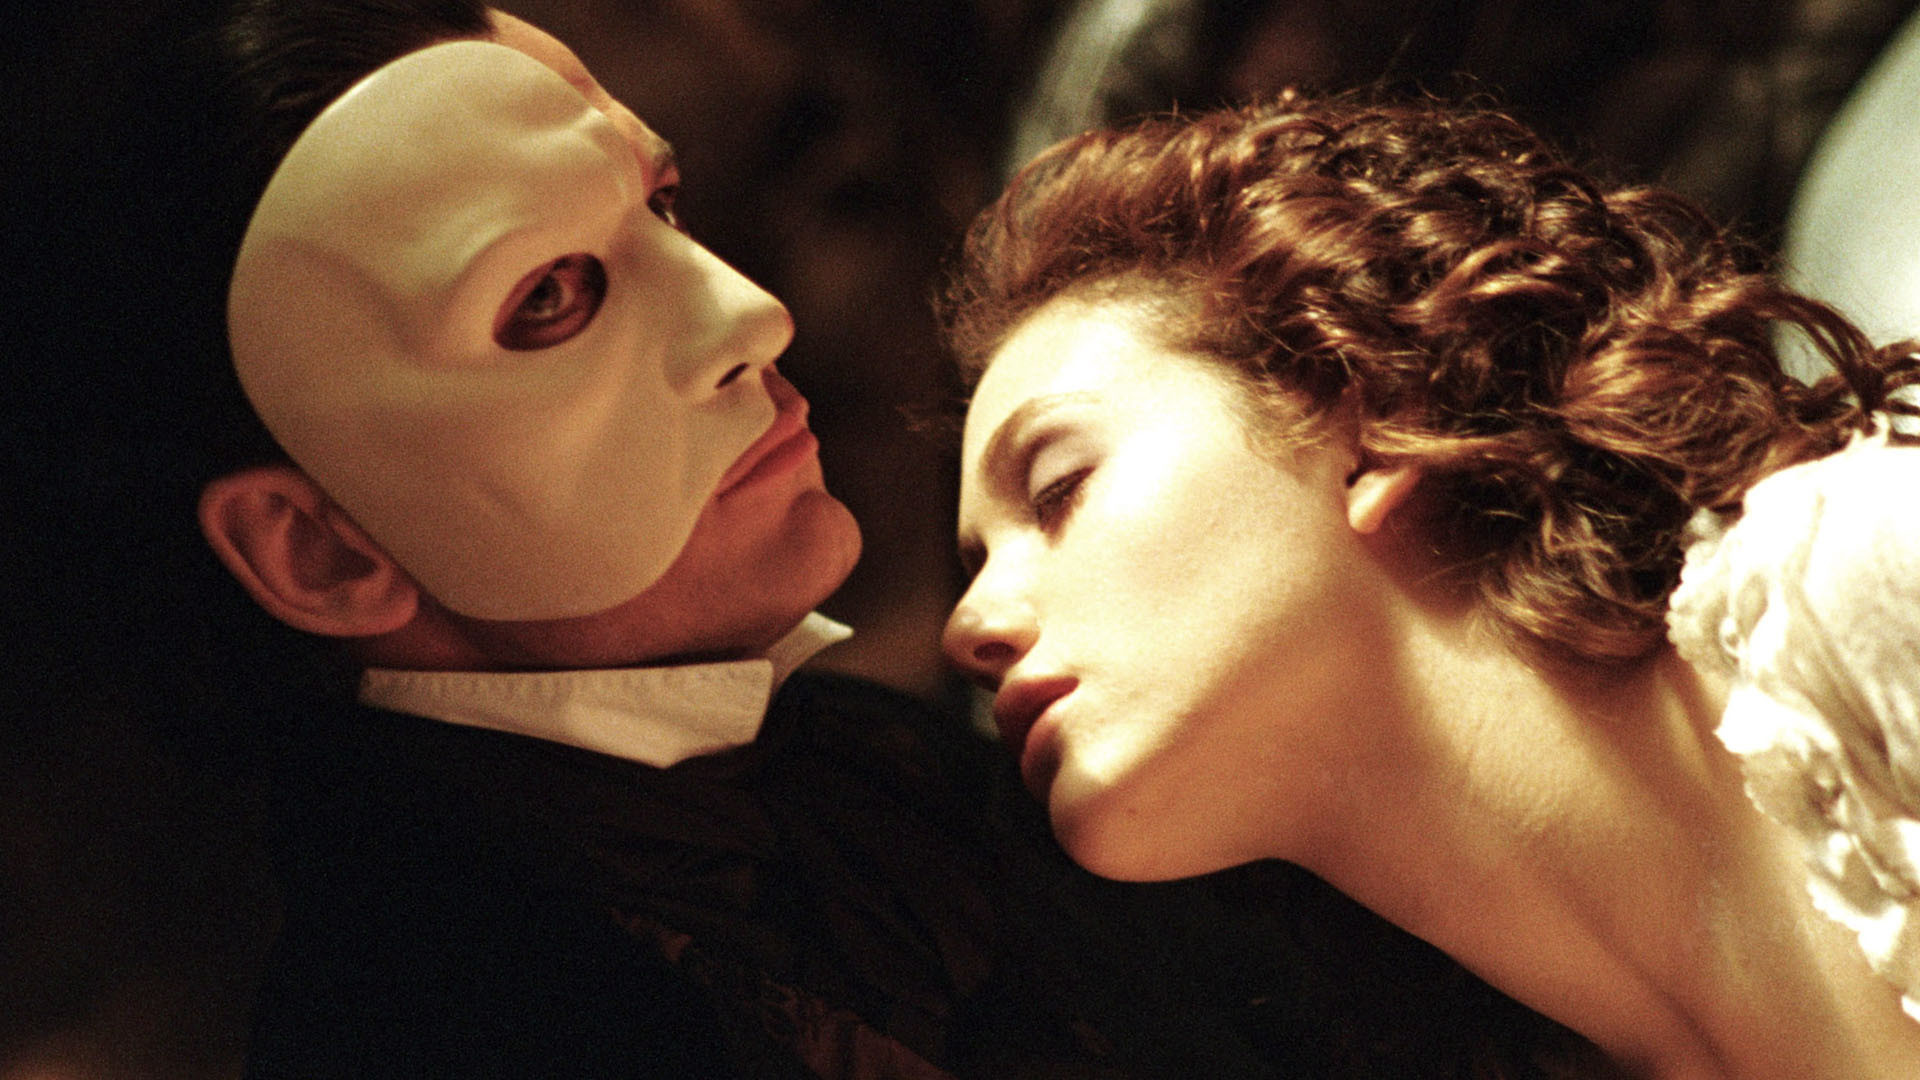 Опера пародия. Призрак оперы 2004 Джерард Батлер. Миранда Ричардсон призрак оперы.